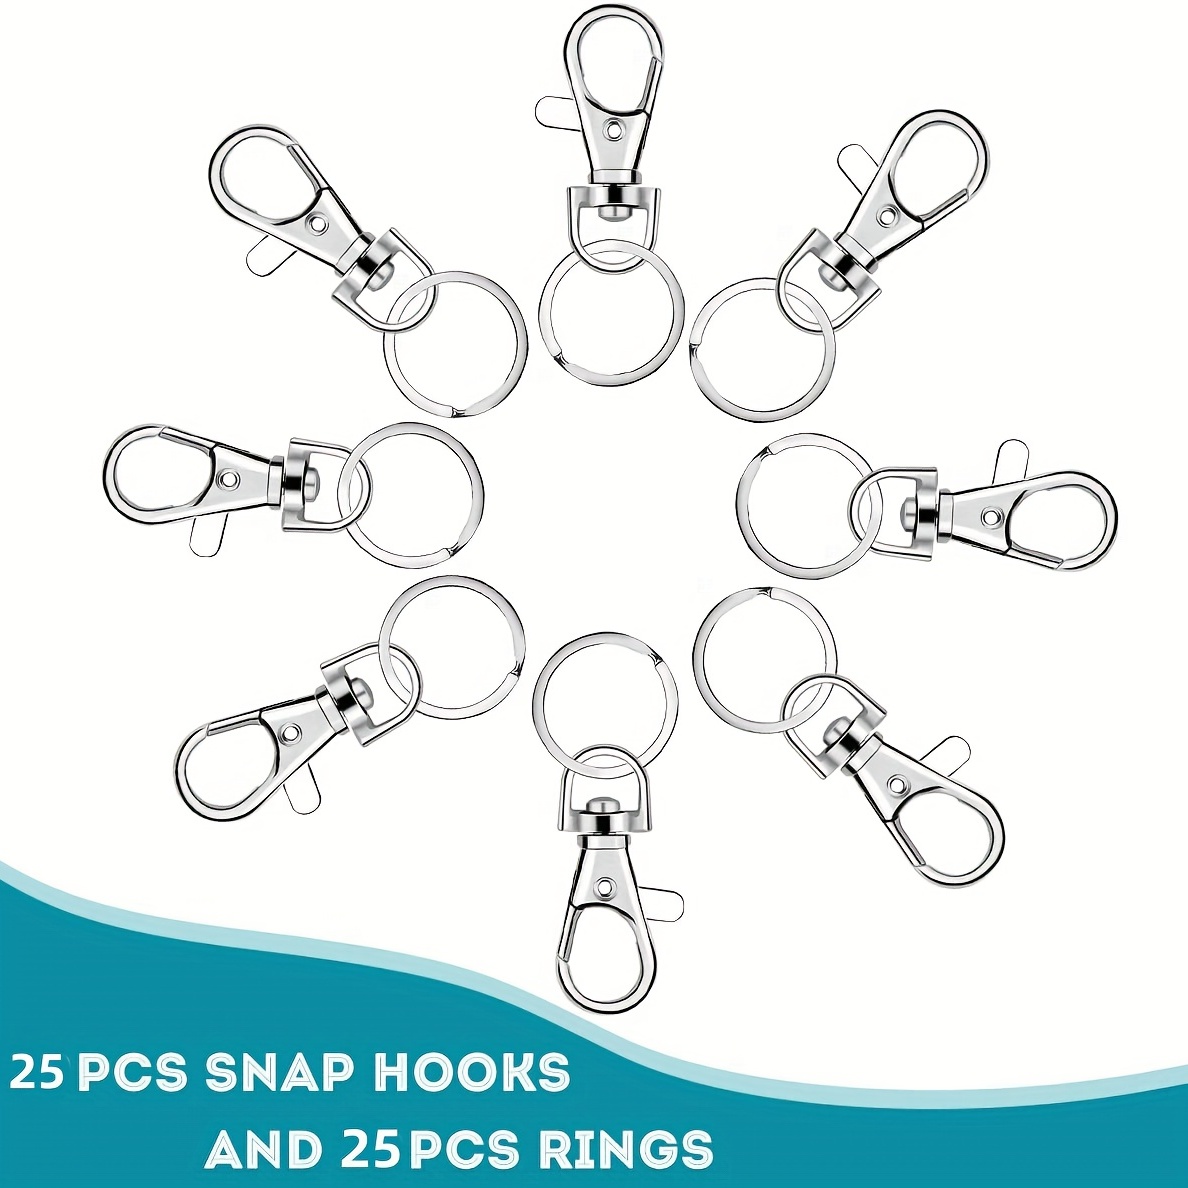 Key Rings Gold/silver Round Keyring Hang Chain Hook DIY Craft